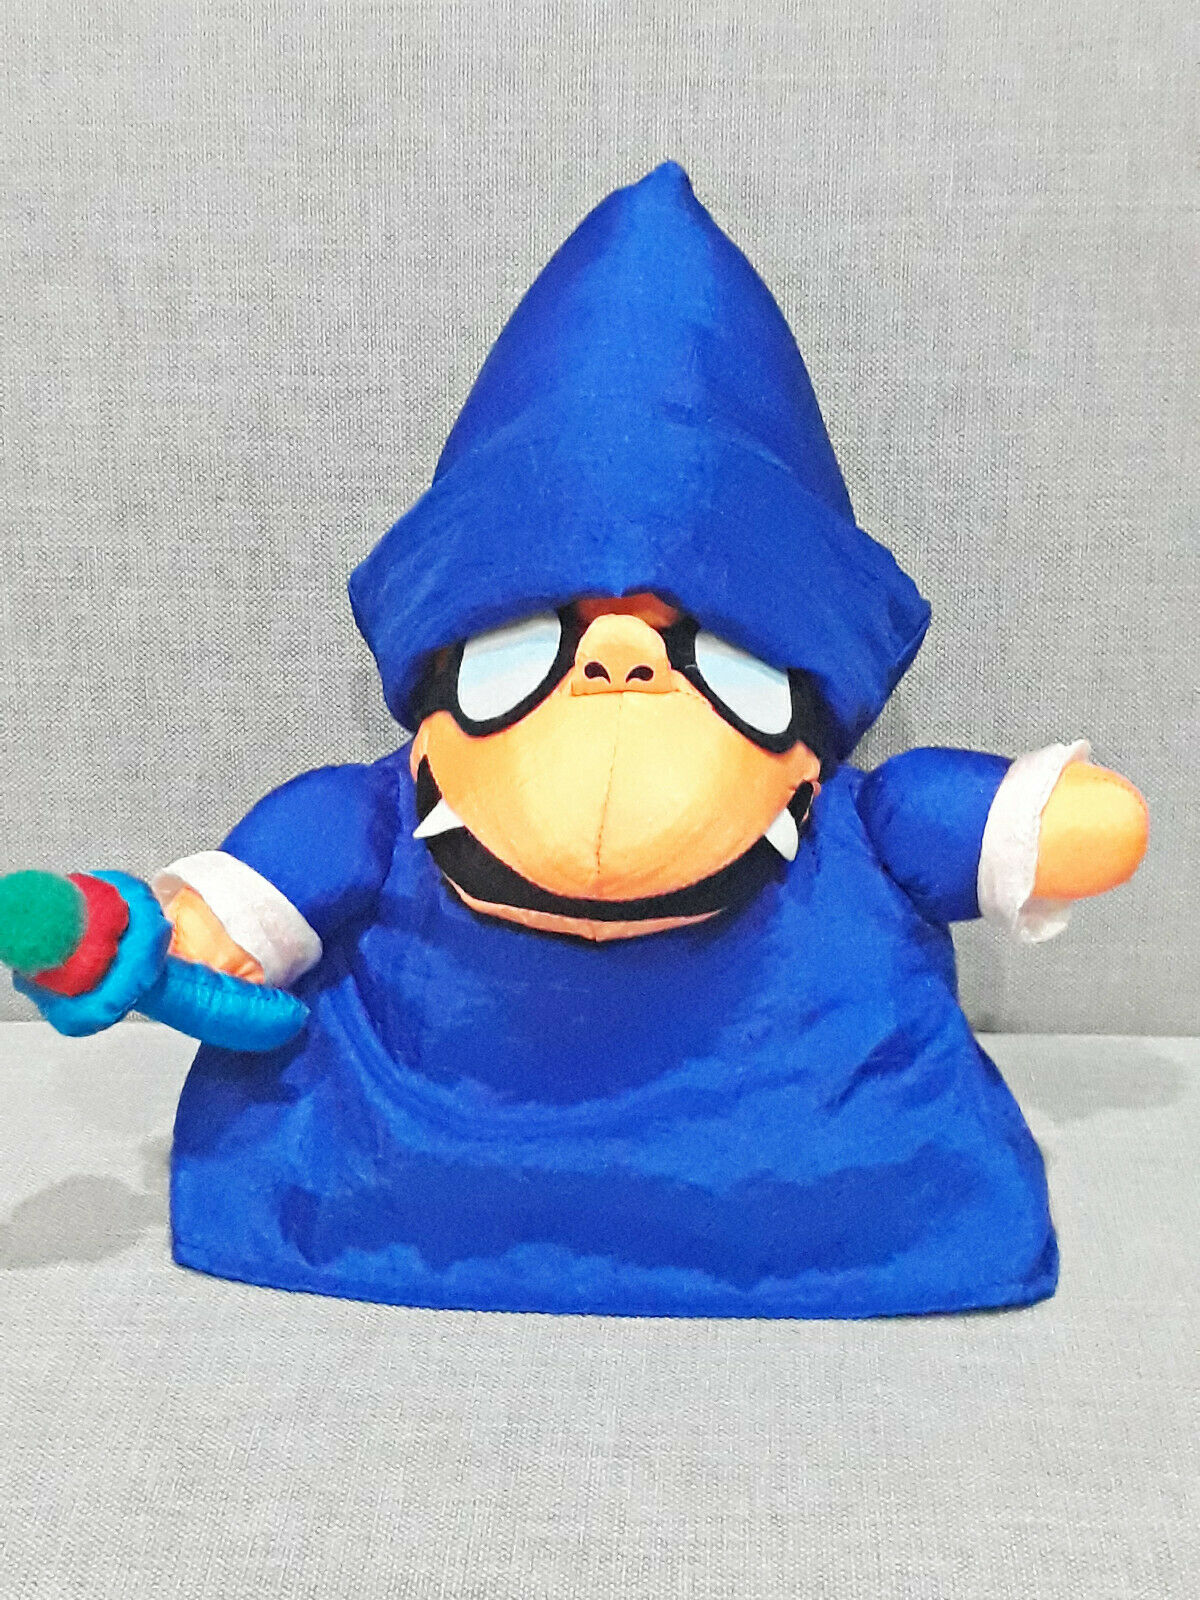 Super Mario Bros Magikoopa Kamek Plush Doll Stuffed Animal Soft